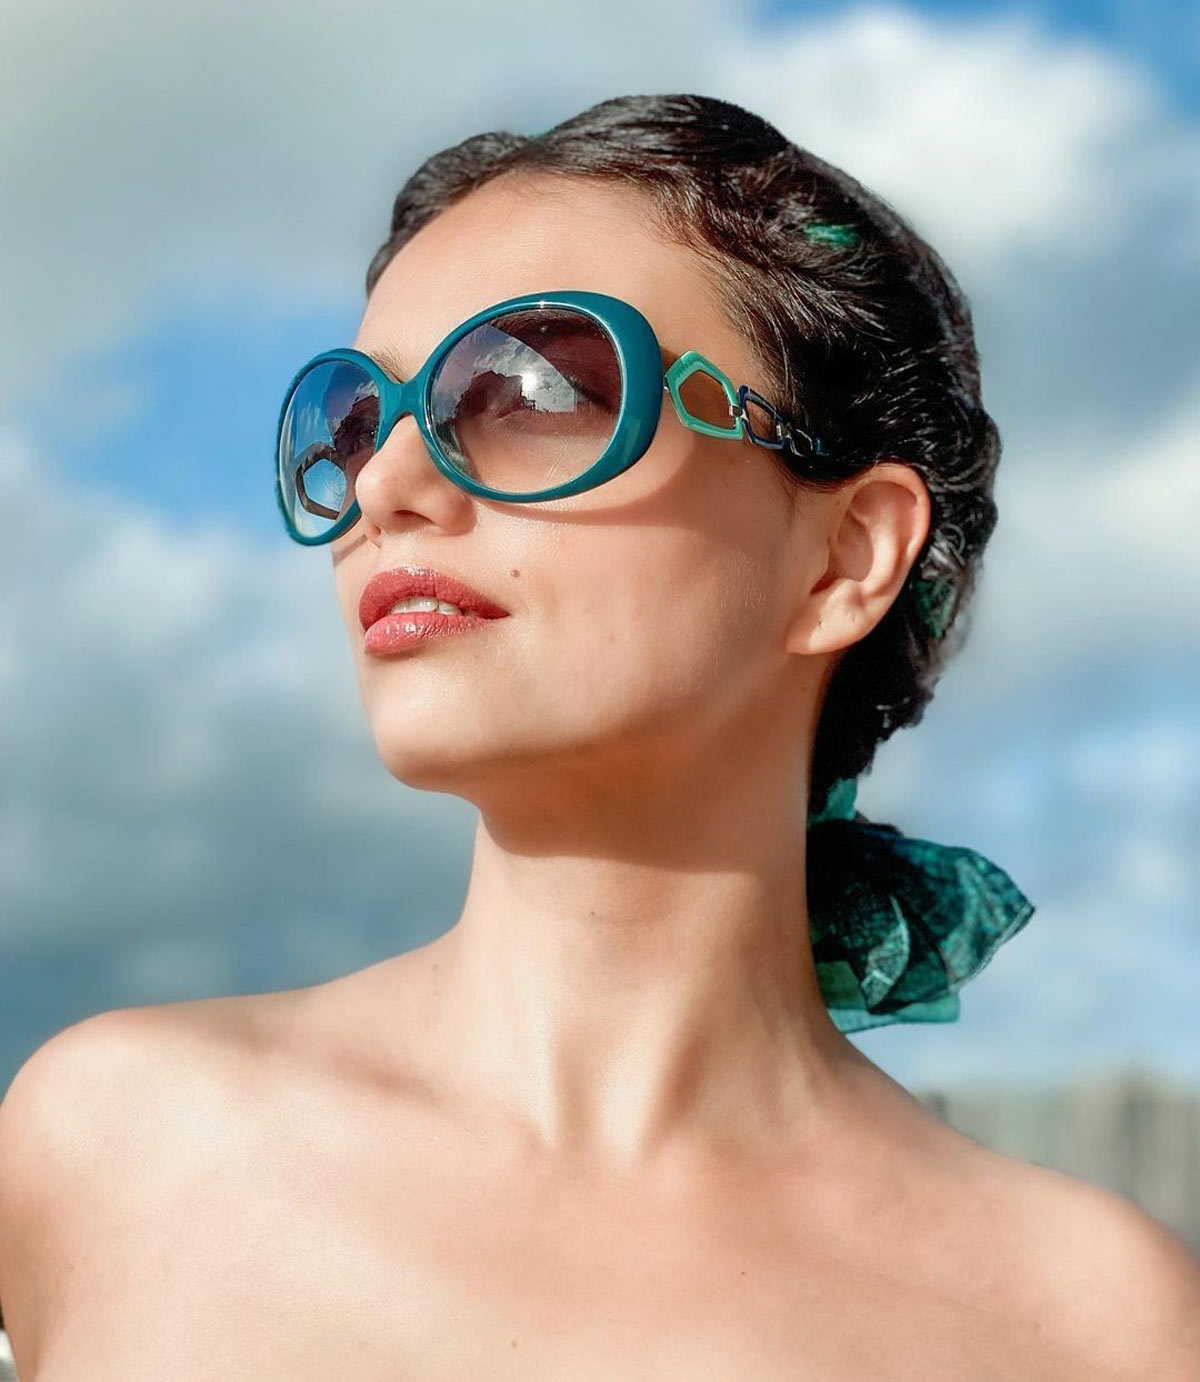 Fendi Brings Diamond-Studded Sunglasses to Fashion Week